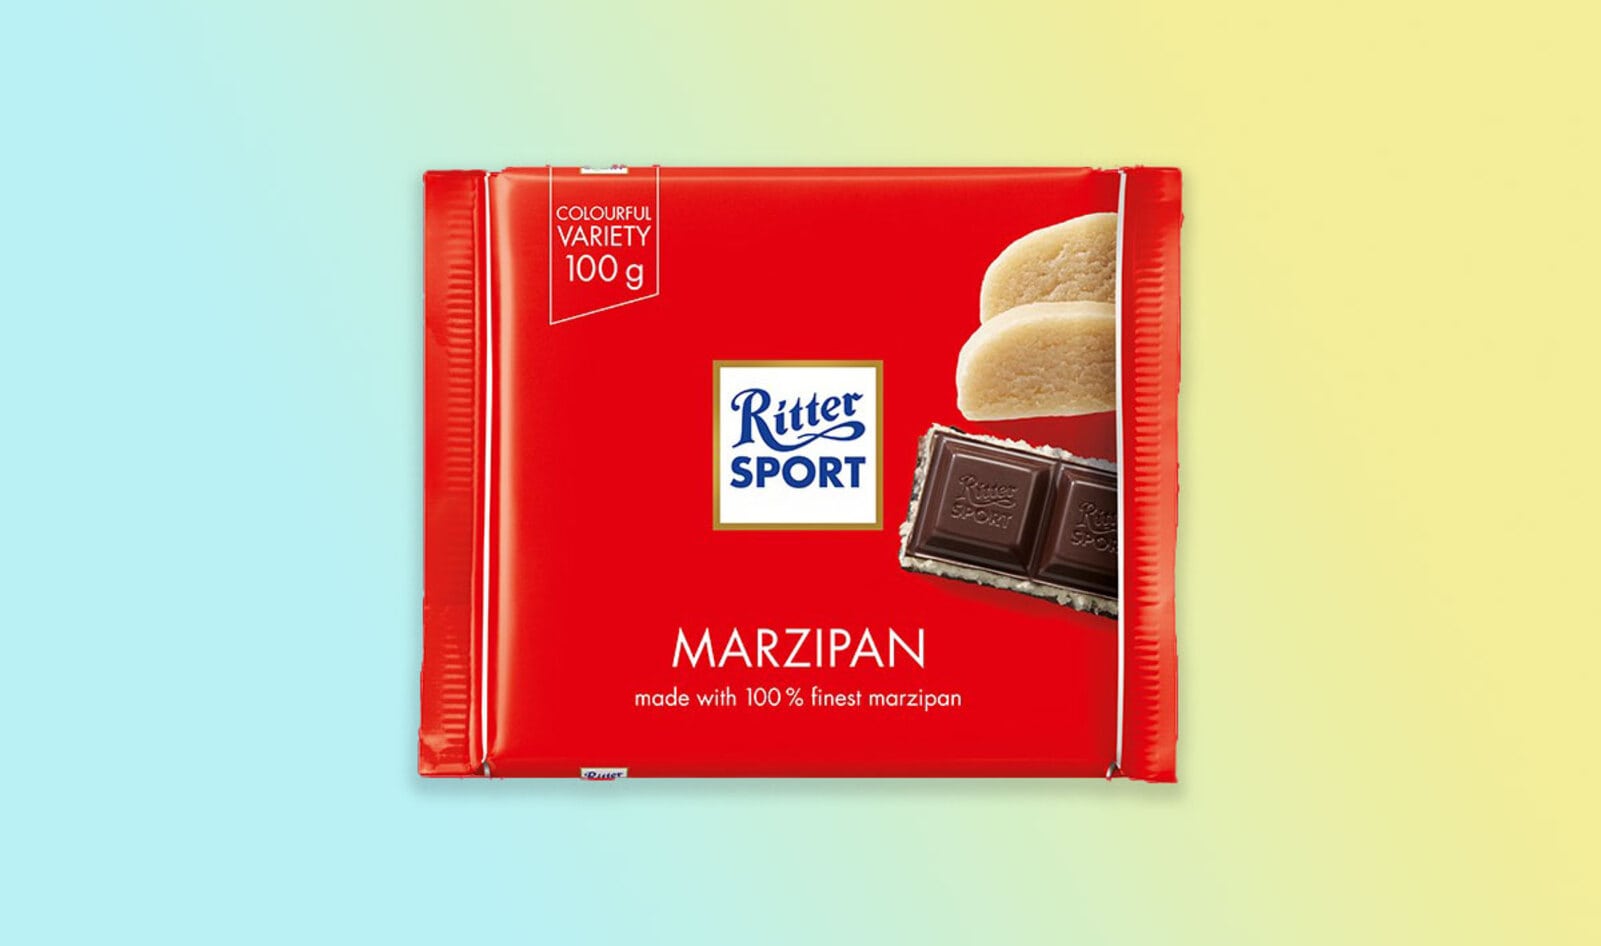 Ritter Sport Launches “Accidentally Vegan” Chocolate Bars on Purpose